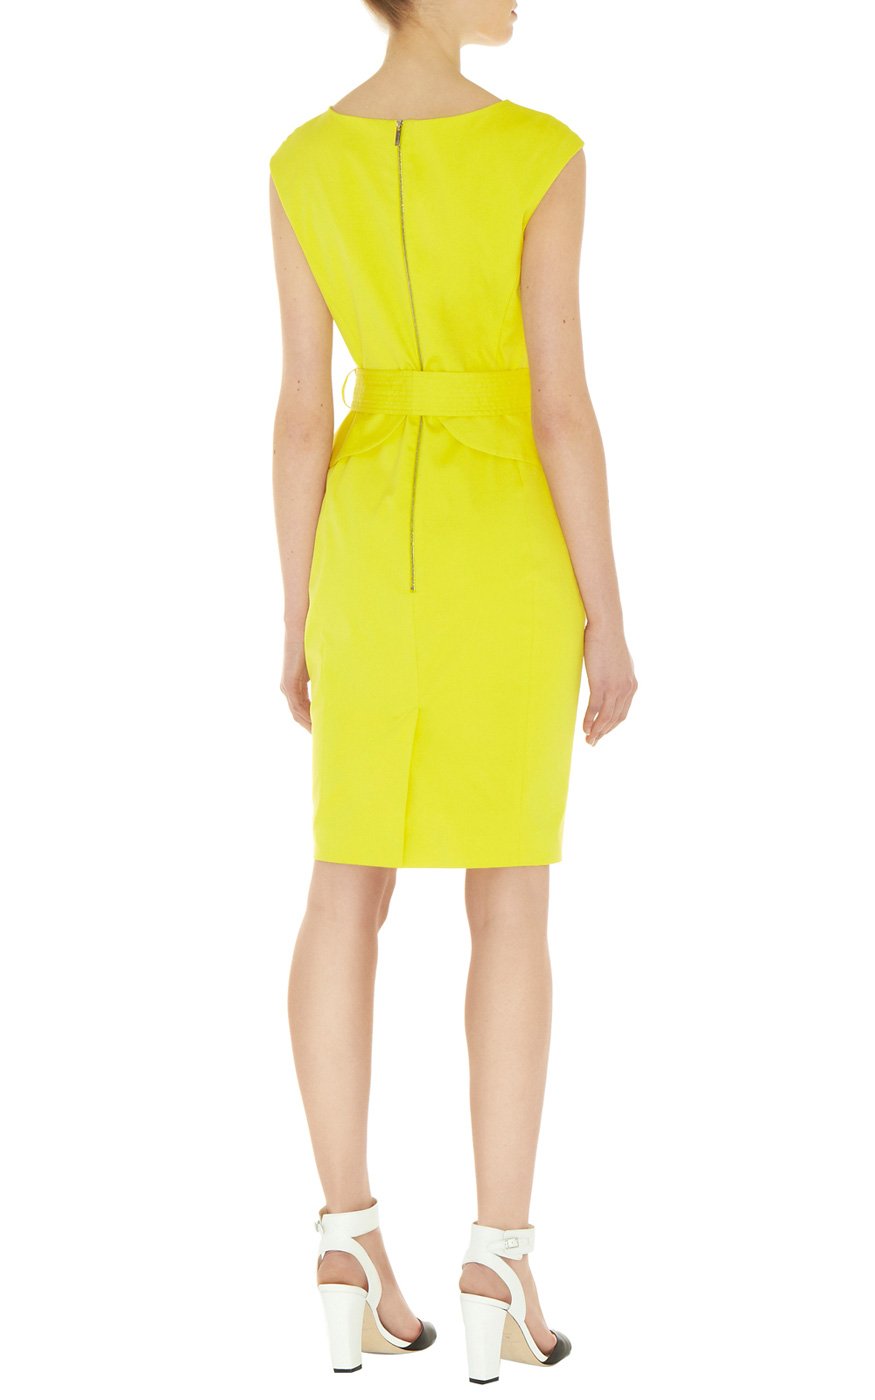 Lyst - Karen millen Colourful Shift Dress in Yellow